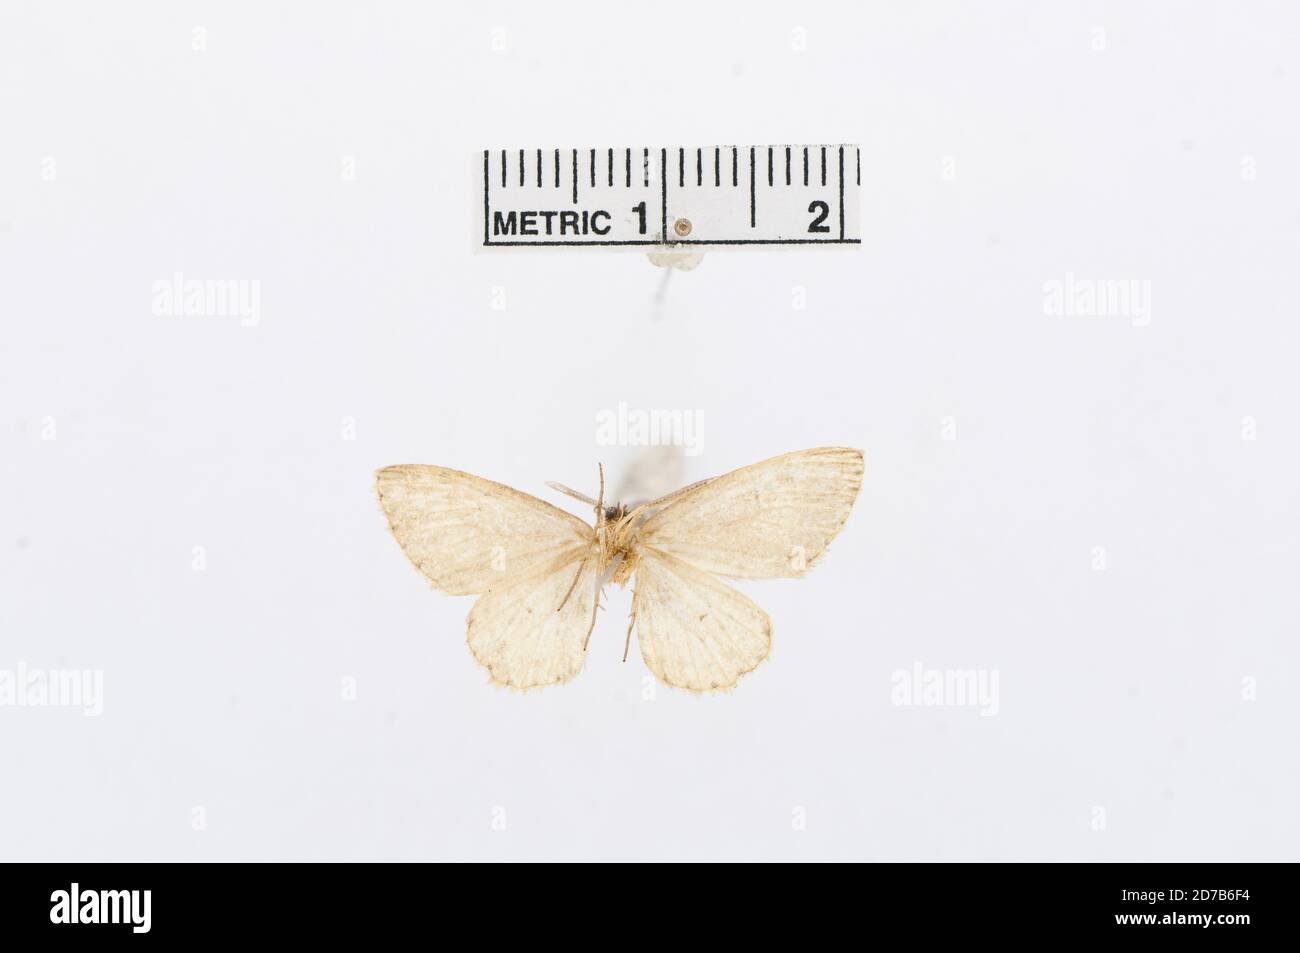 Pinned, Amerique Bor., Tephrosia cribrataria Guenee, 1858, Animalia, Arthropoda, Insecta, Lepidoptera, Geometridae, Ennominae Stock Photo